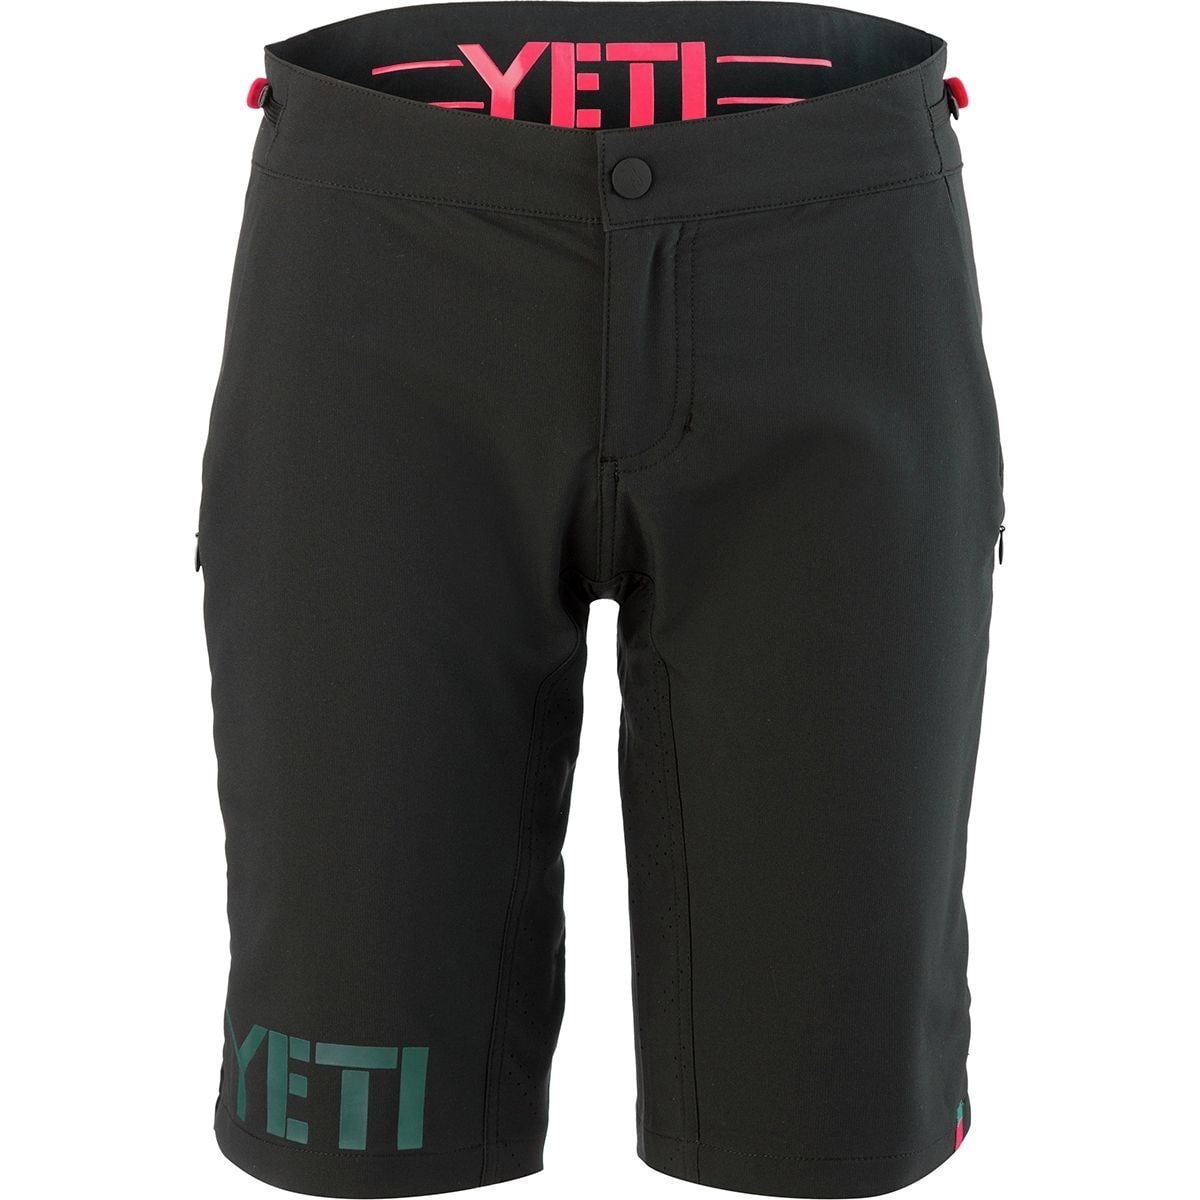 Yeti Cycles Enduro Shorts - Women's